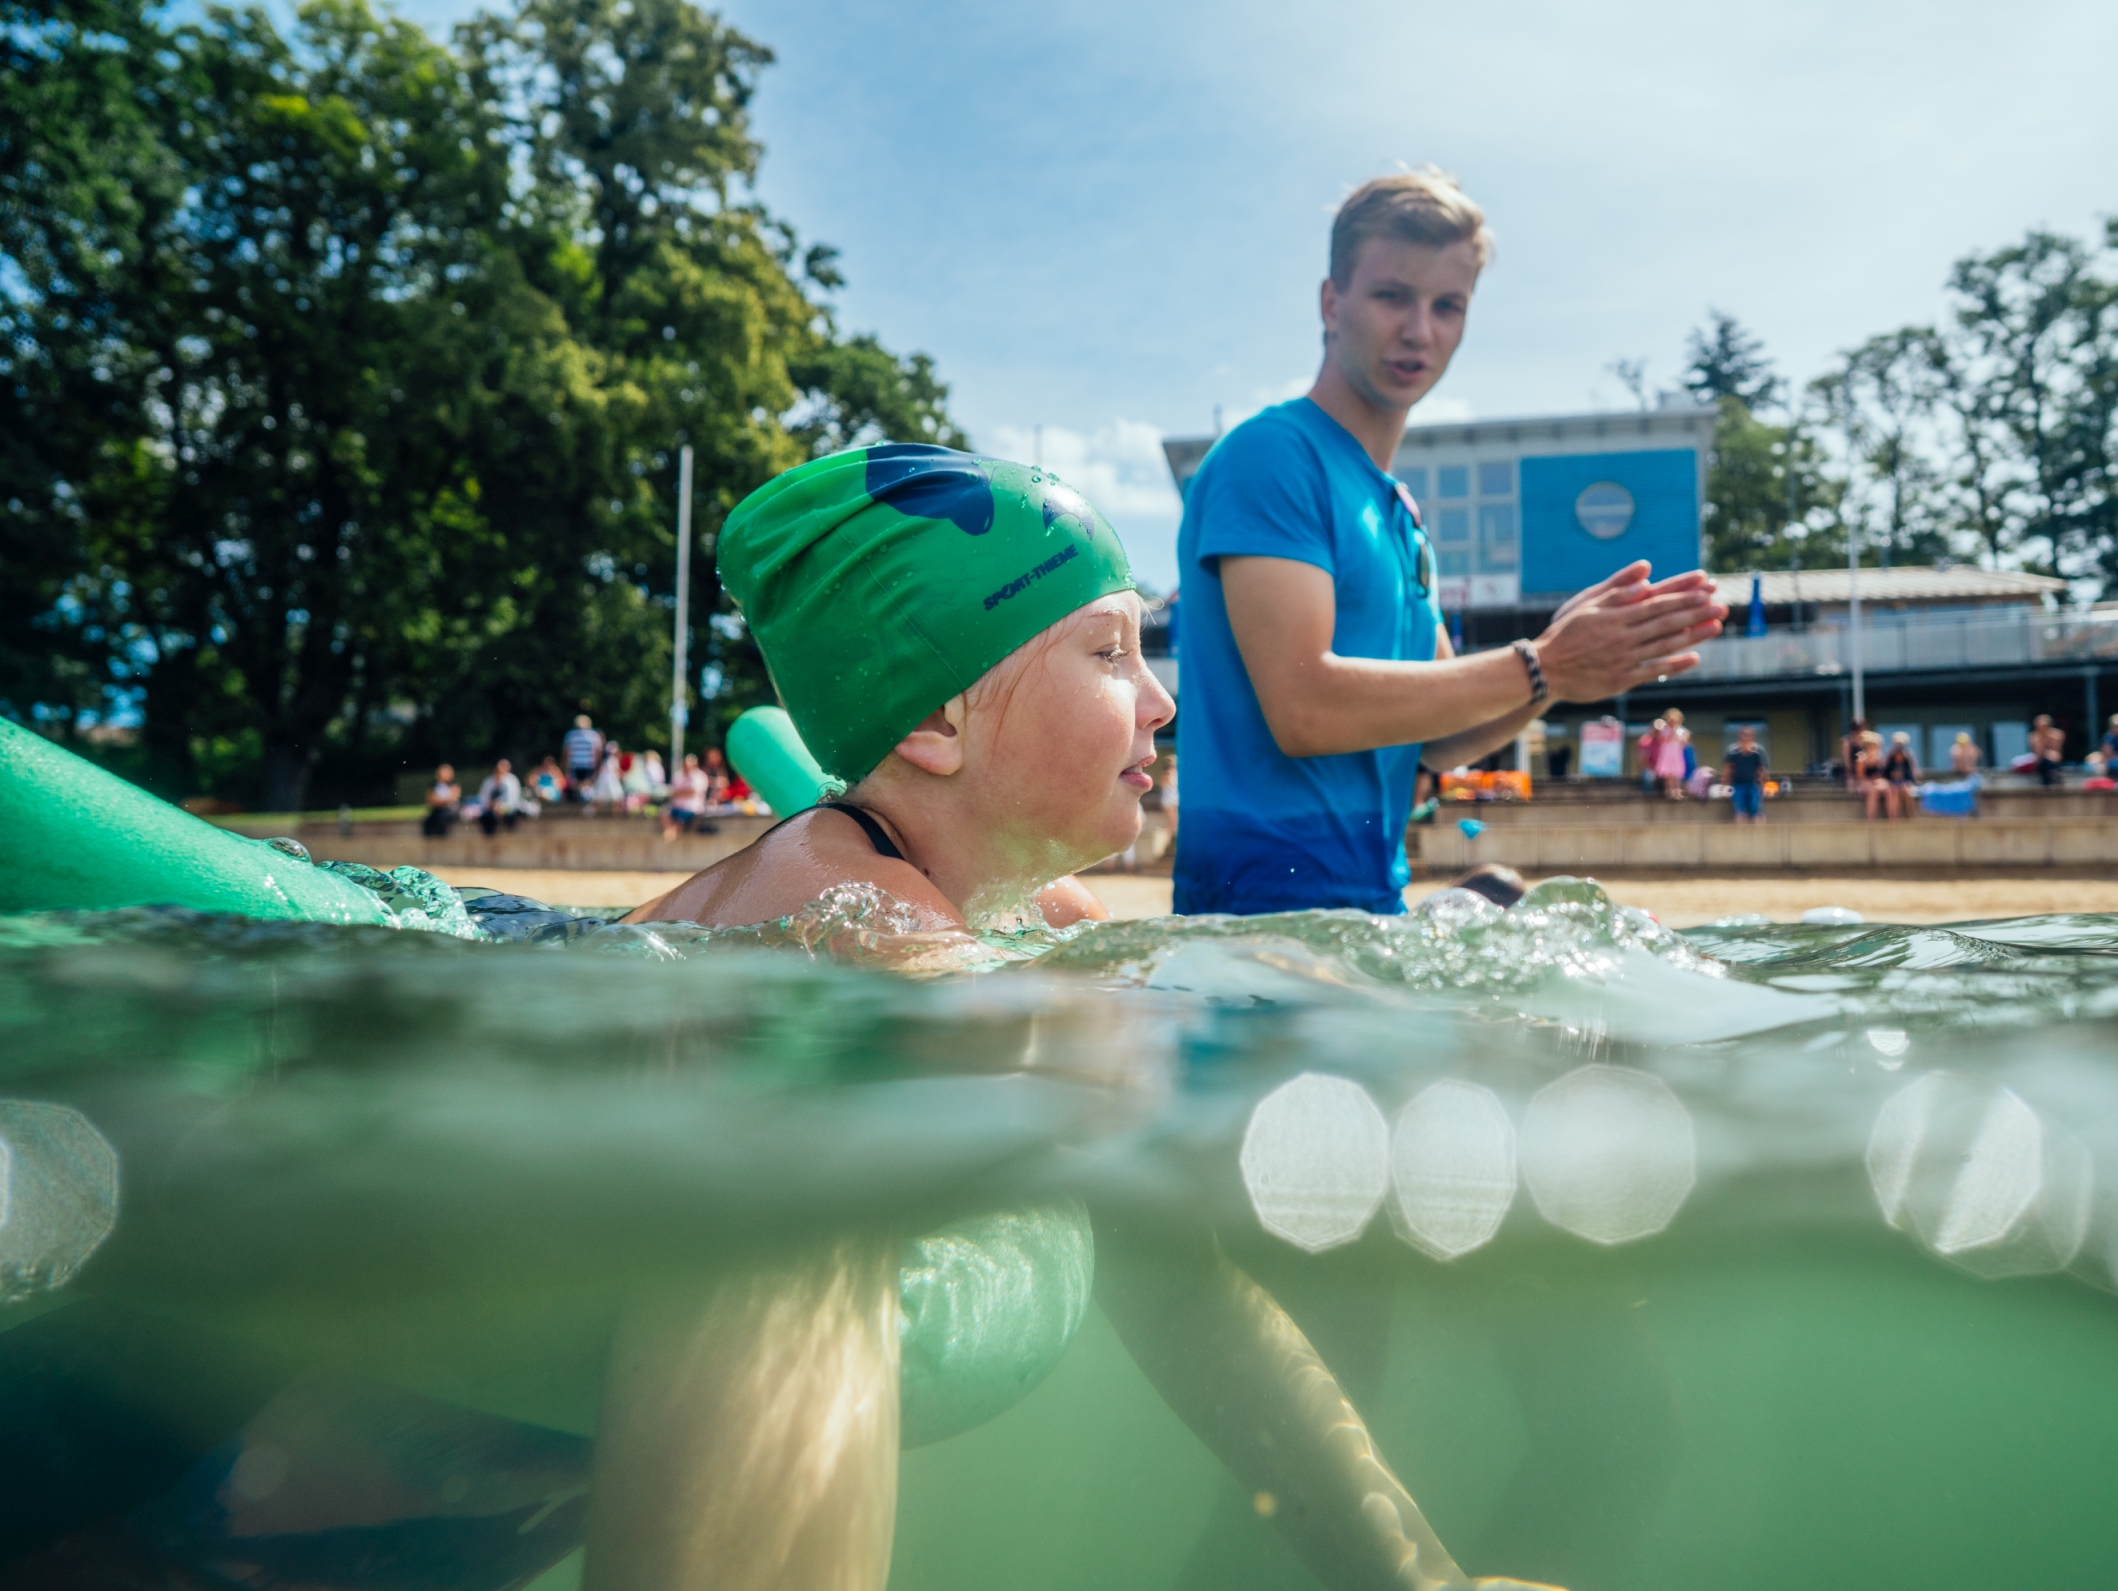 Ferienschwimmkurse in MV | Foto: TMV/Gänsicke